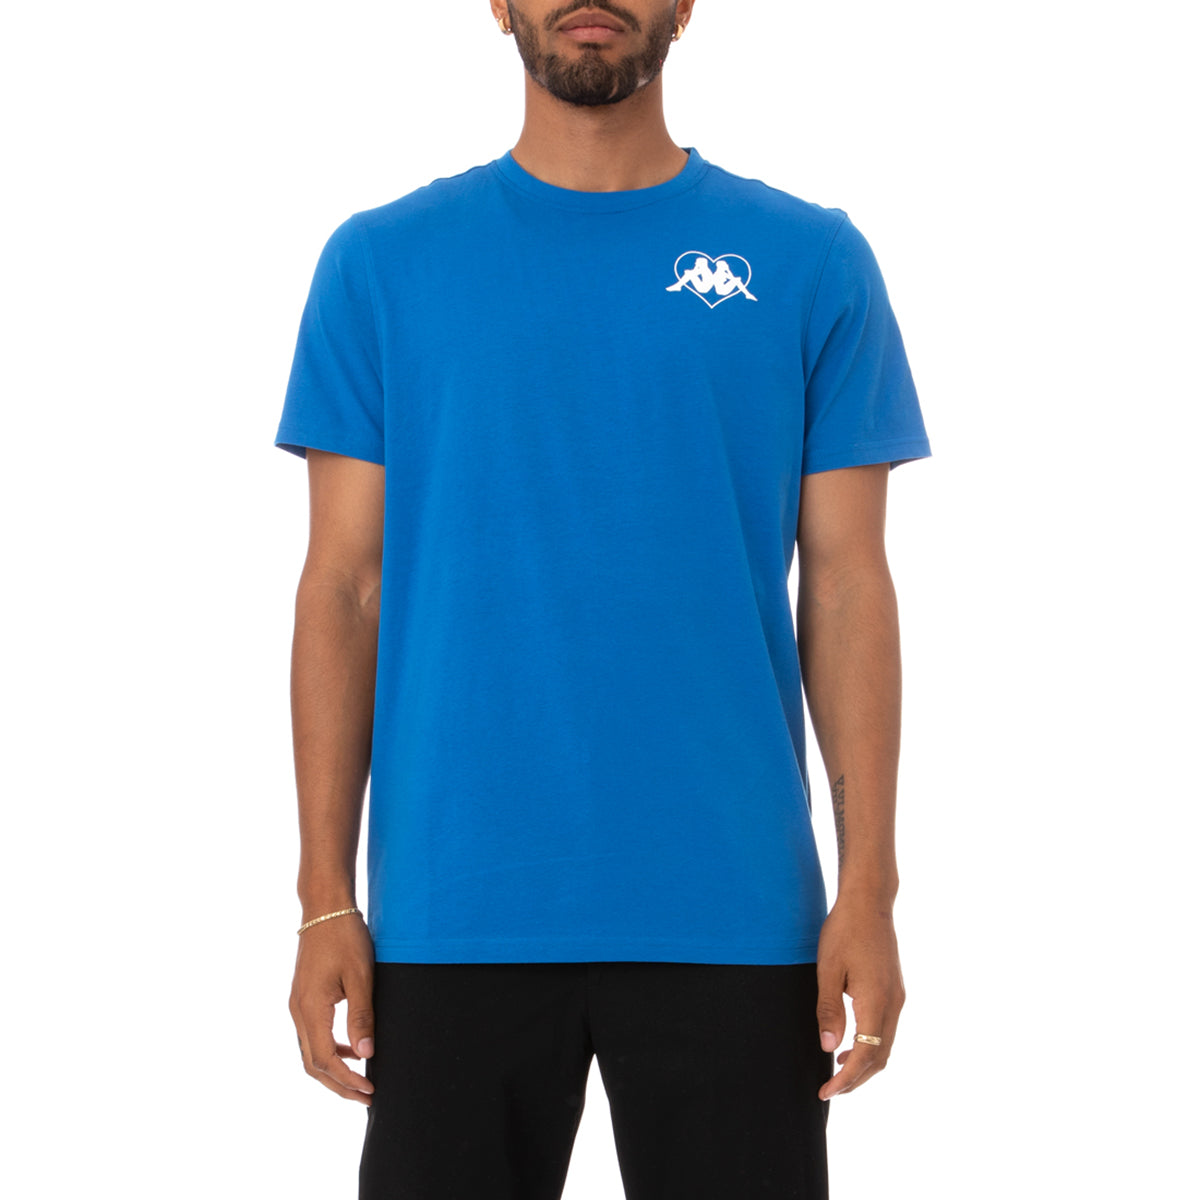 Camiseta Bytom azul hombre - imagen 1